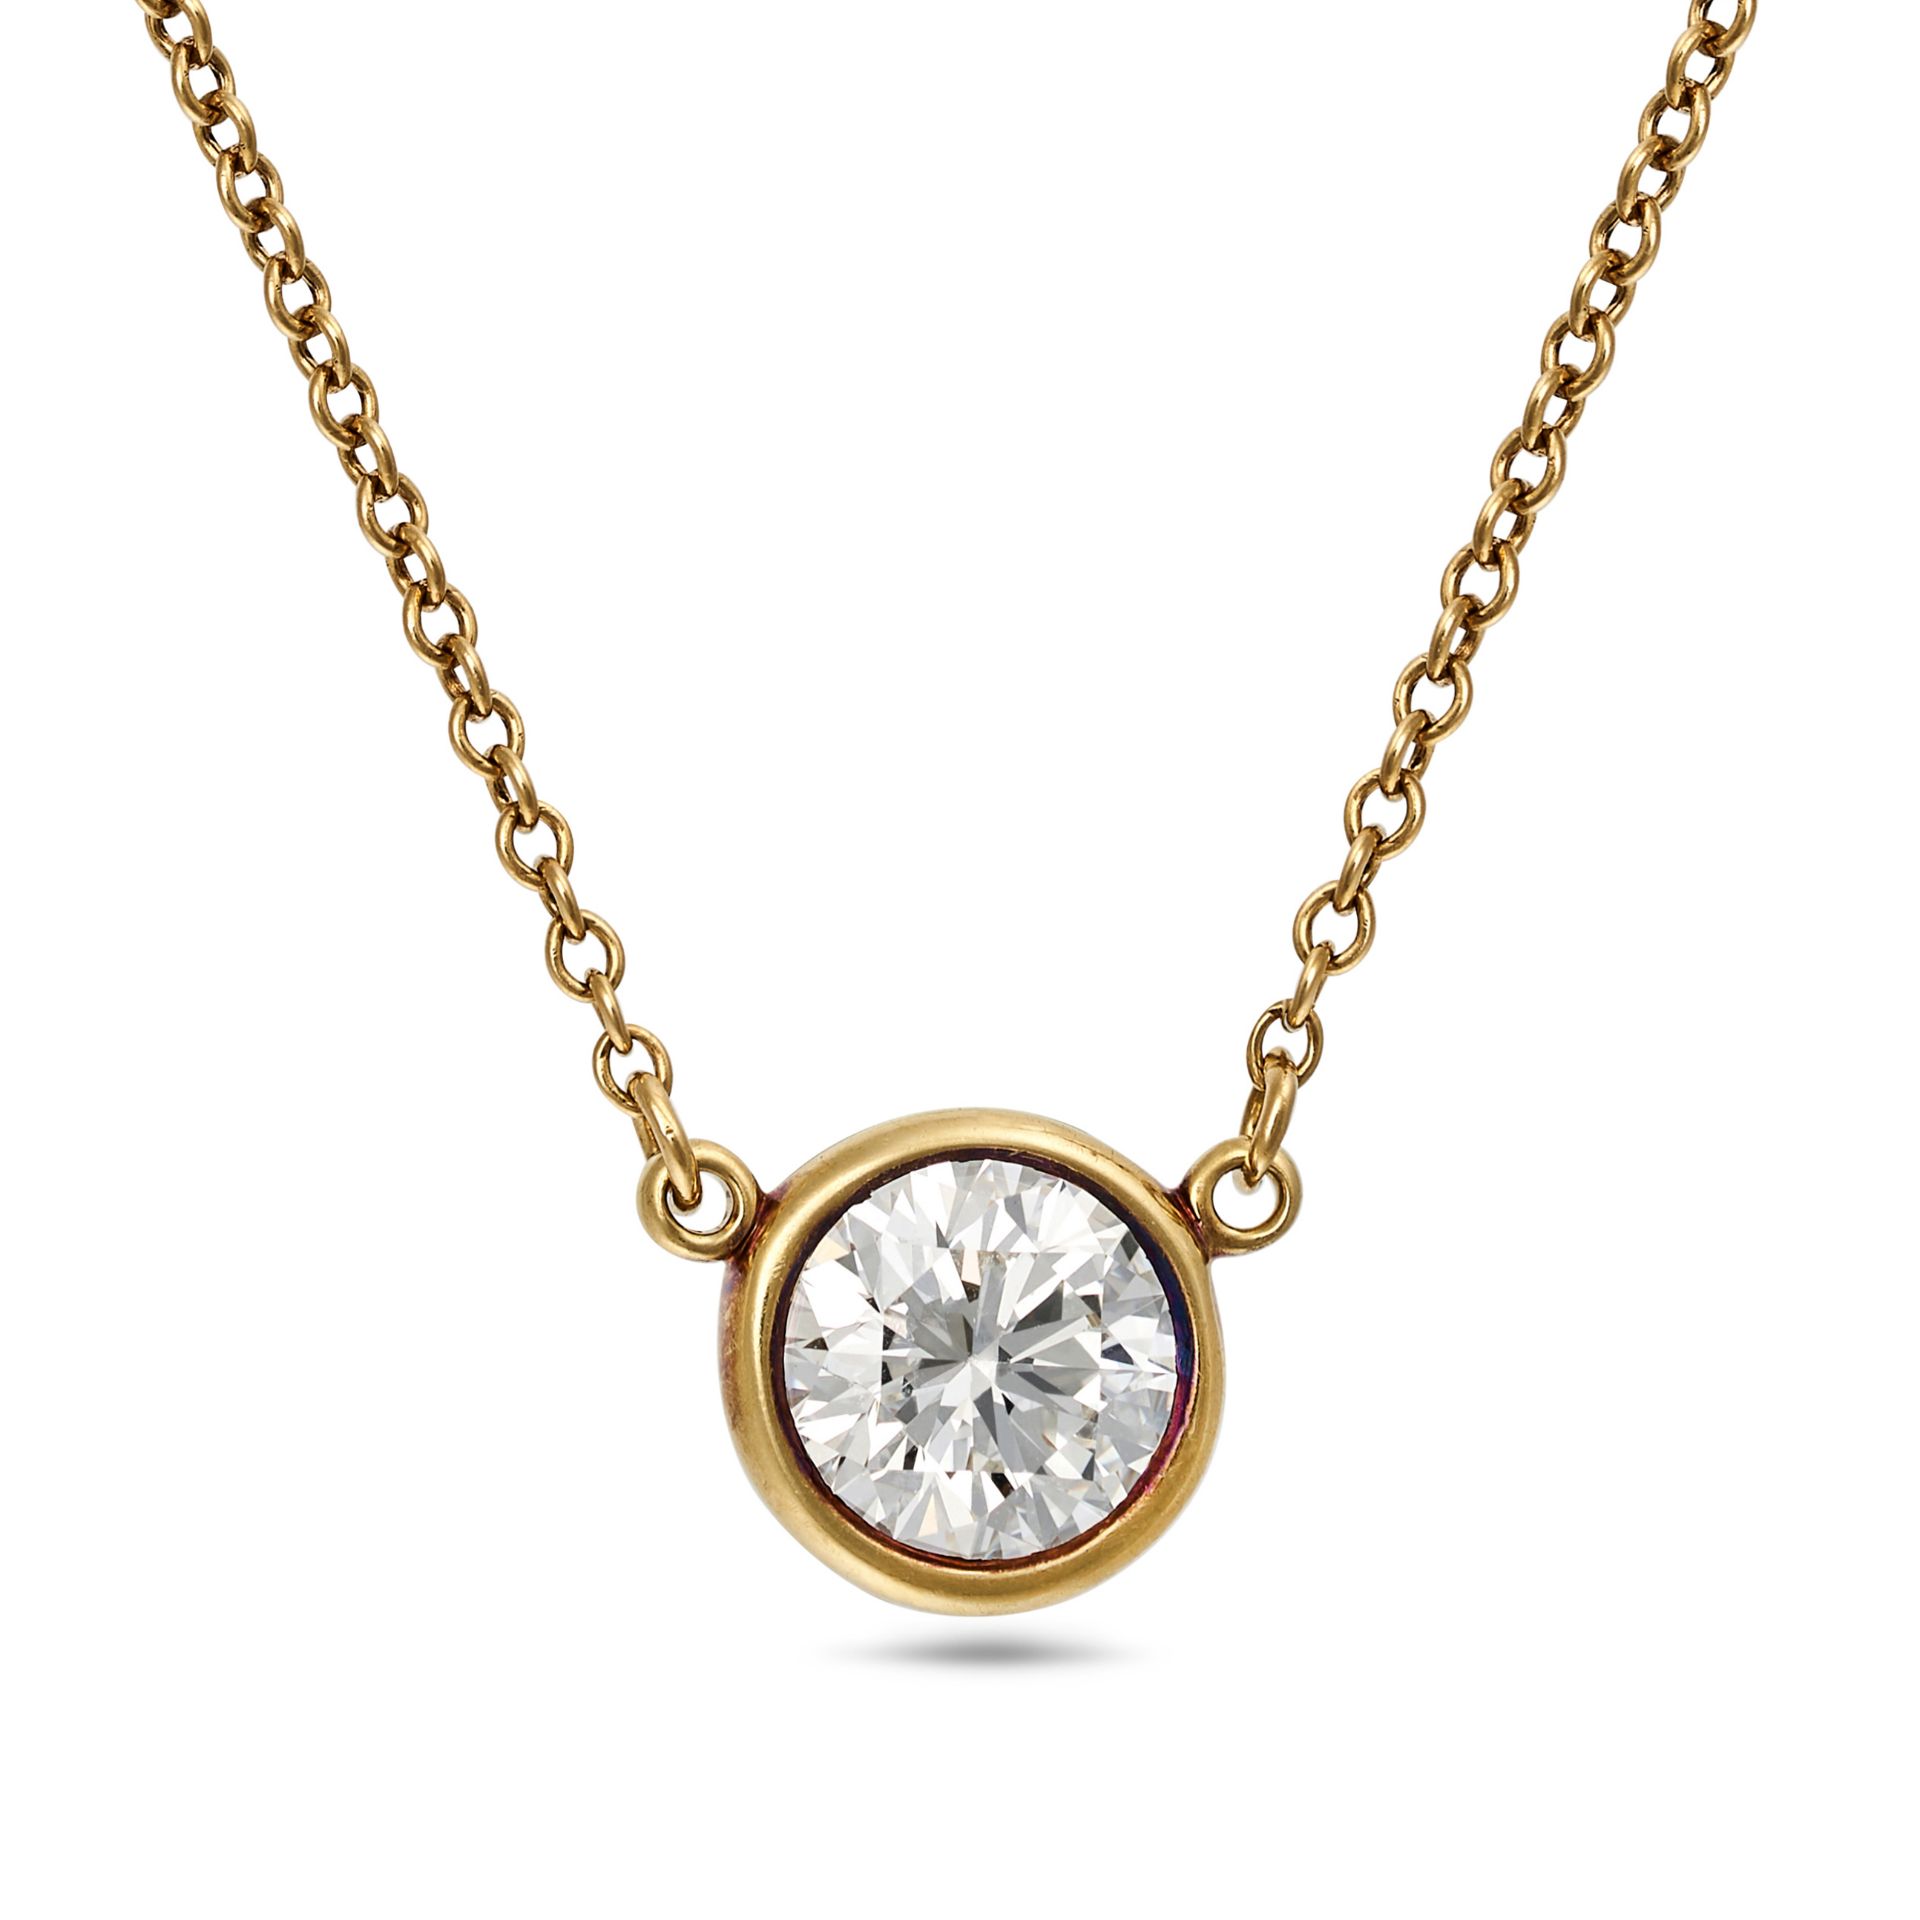 ELSA PERETTI FOR TIFFANY & CO., A DIAMONDS BY THE YARD SOLITAIRE DIAMOND PENDANT NECKLACE in 18ct...